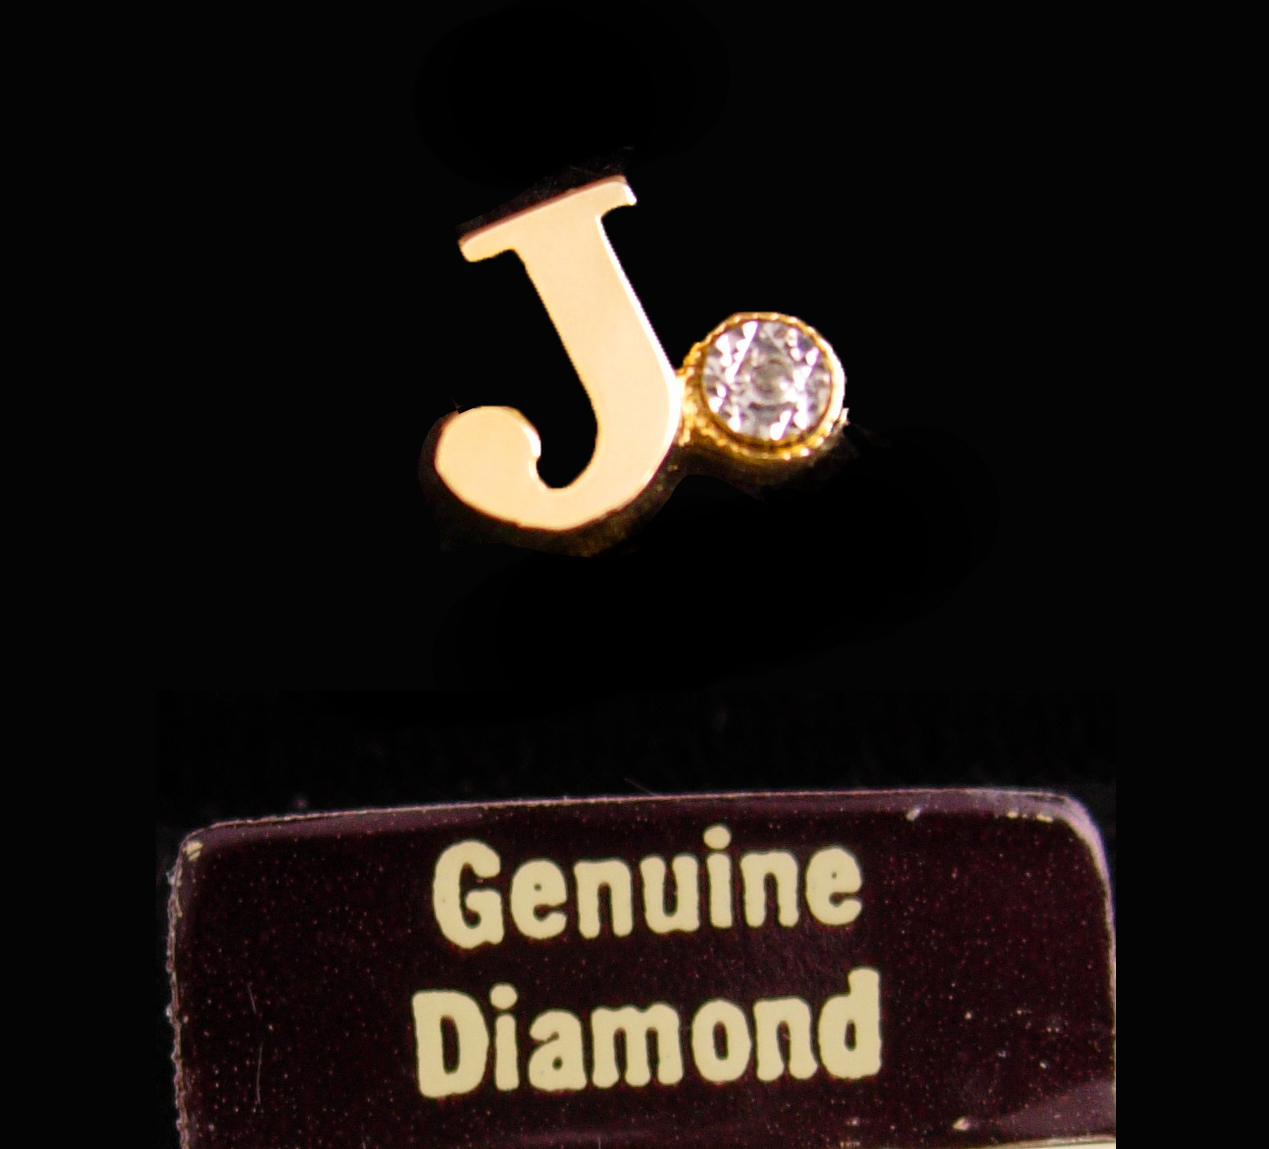 Genuine diamond tie tack - Pierre Cardin - Initial J - personalized letter J - v - $125.00